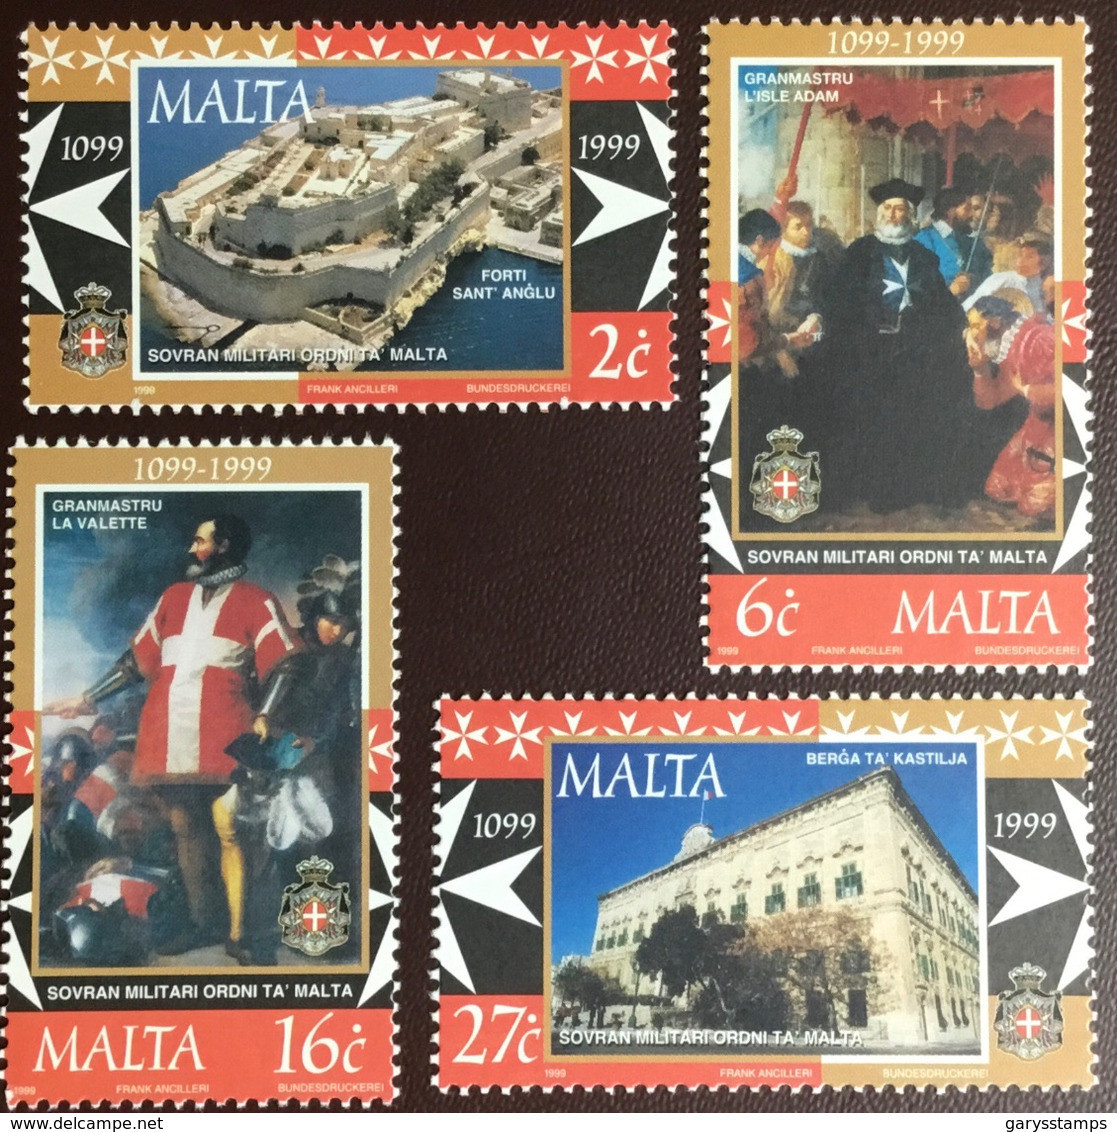 Malta 1999 Sovereign Military Order MNH - Malte